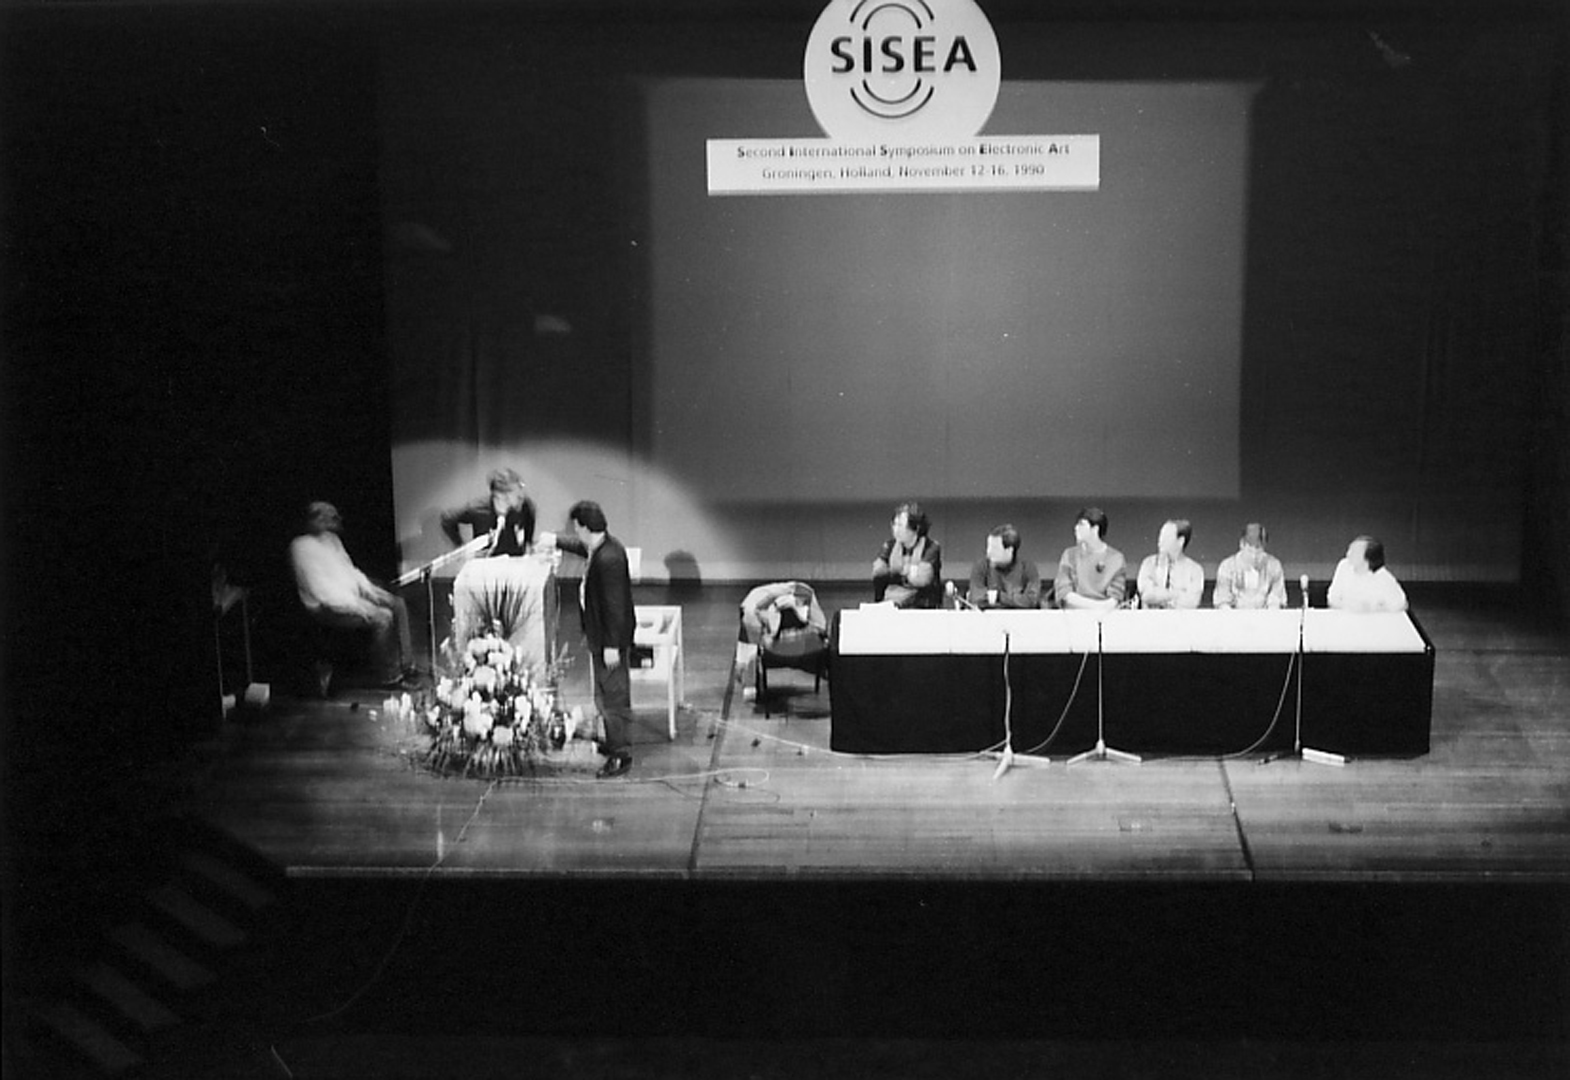 ©SISEA: Second International Symposium on Electronic Art, Carl Eugene Loeffler, Vernon Reed, Fred Truck, and Benjamin J. Britton, Interactive Electronic Art